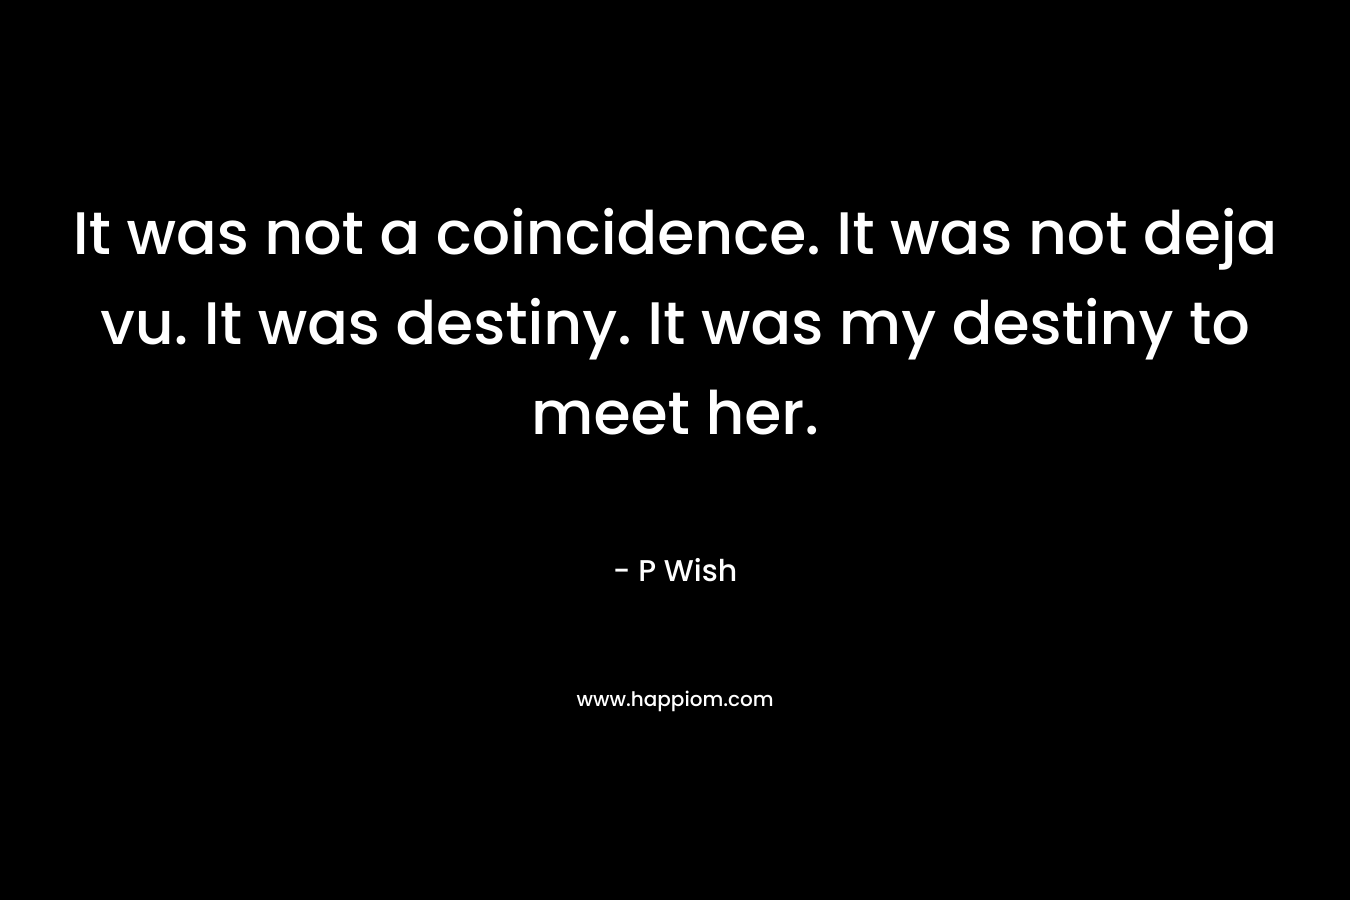 It was not a coincidence. It was not deja vu. It was destiny. It was my destiny to meet her.